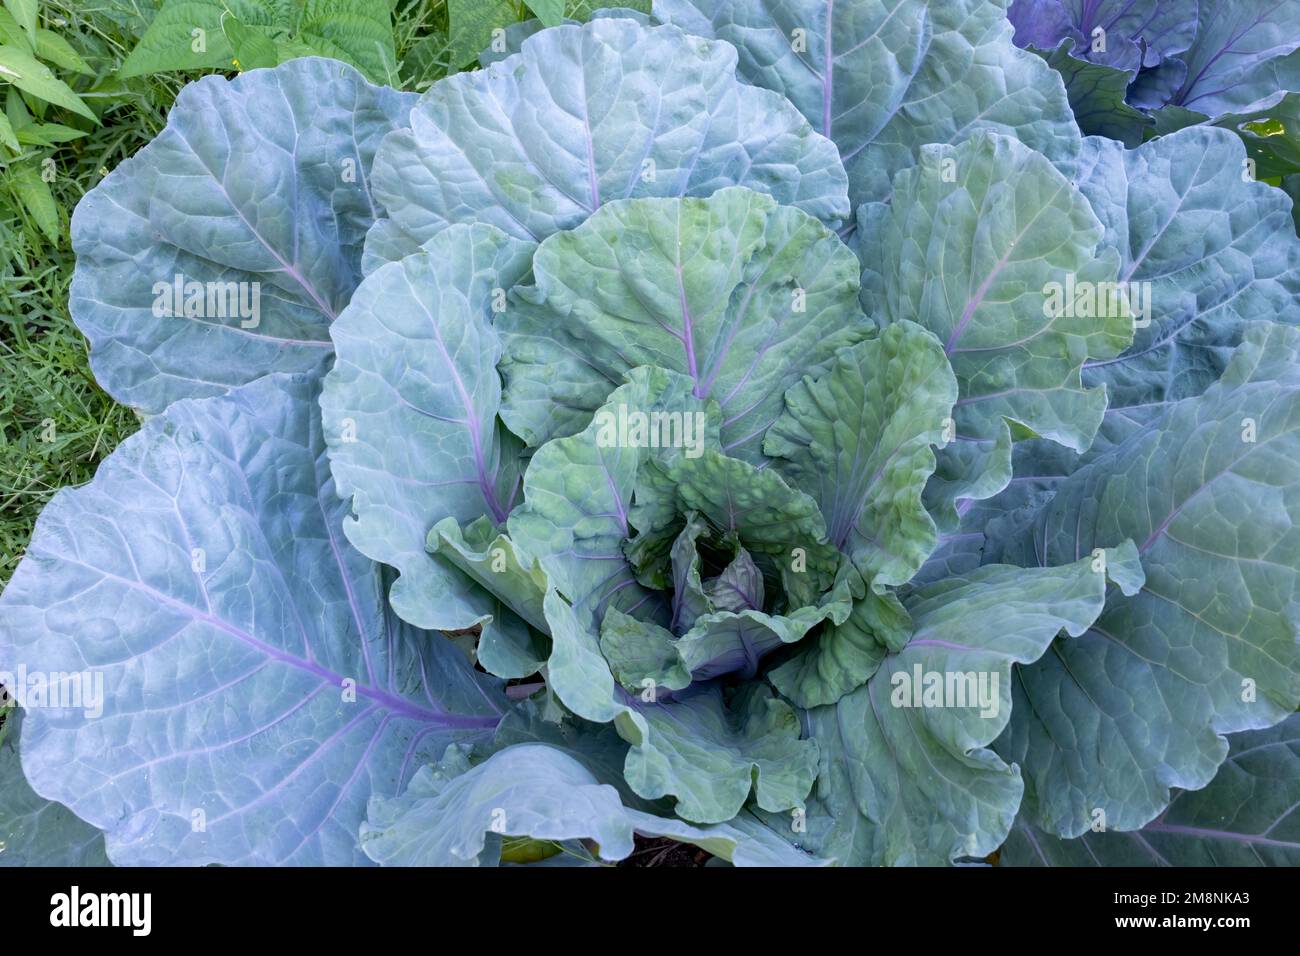 Issaquah, Washington, USA.  Silver-colored cabbage plant Stock Photo